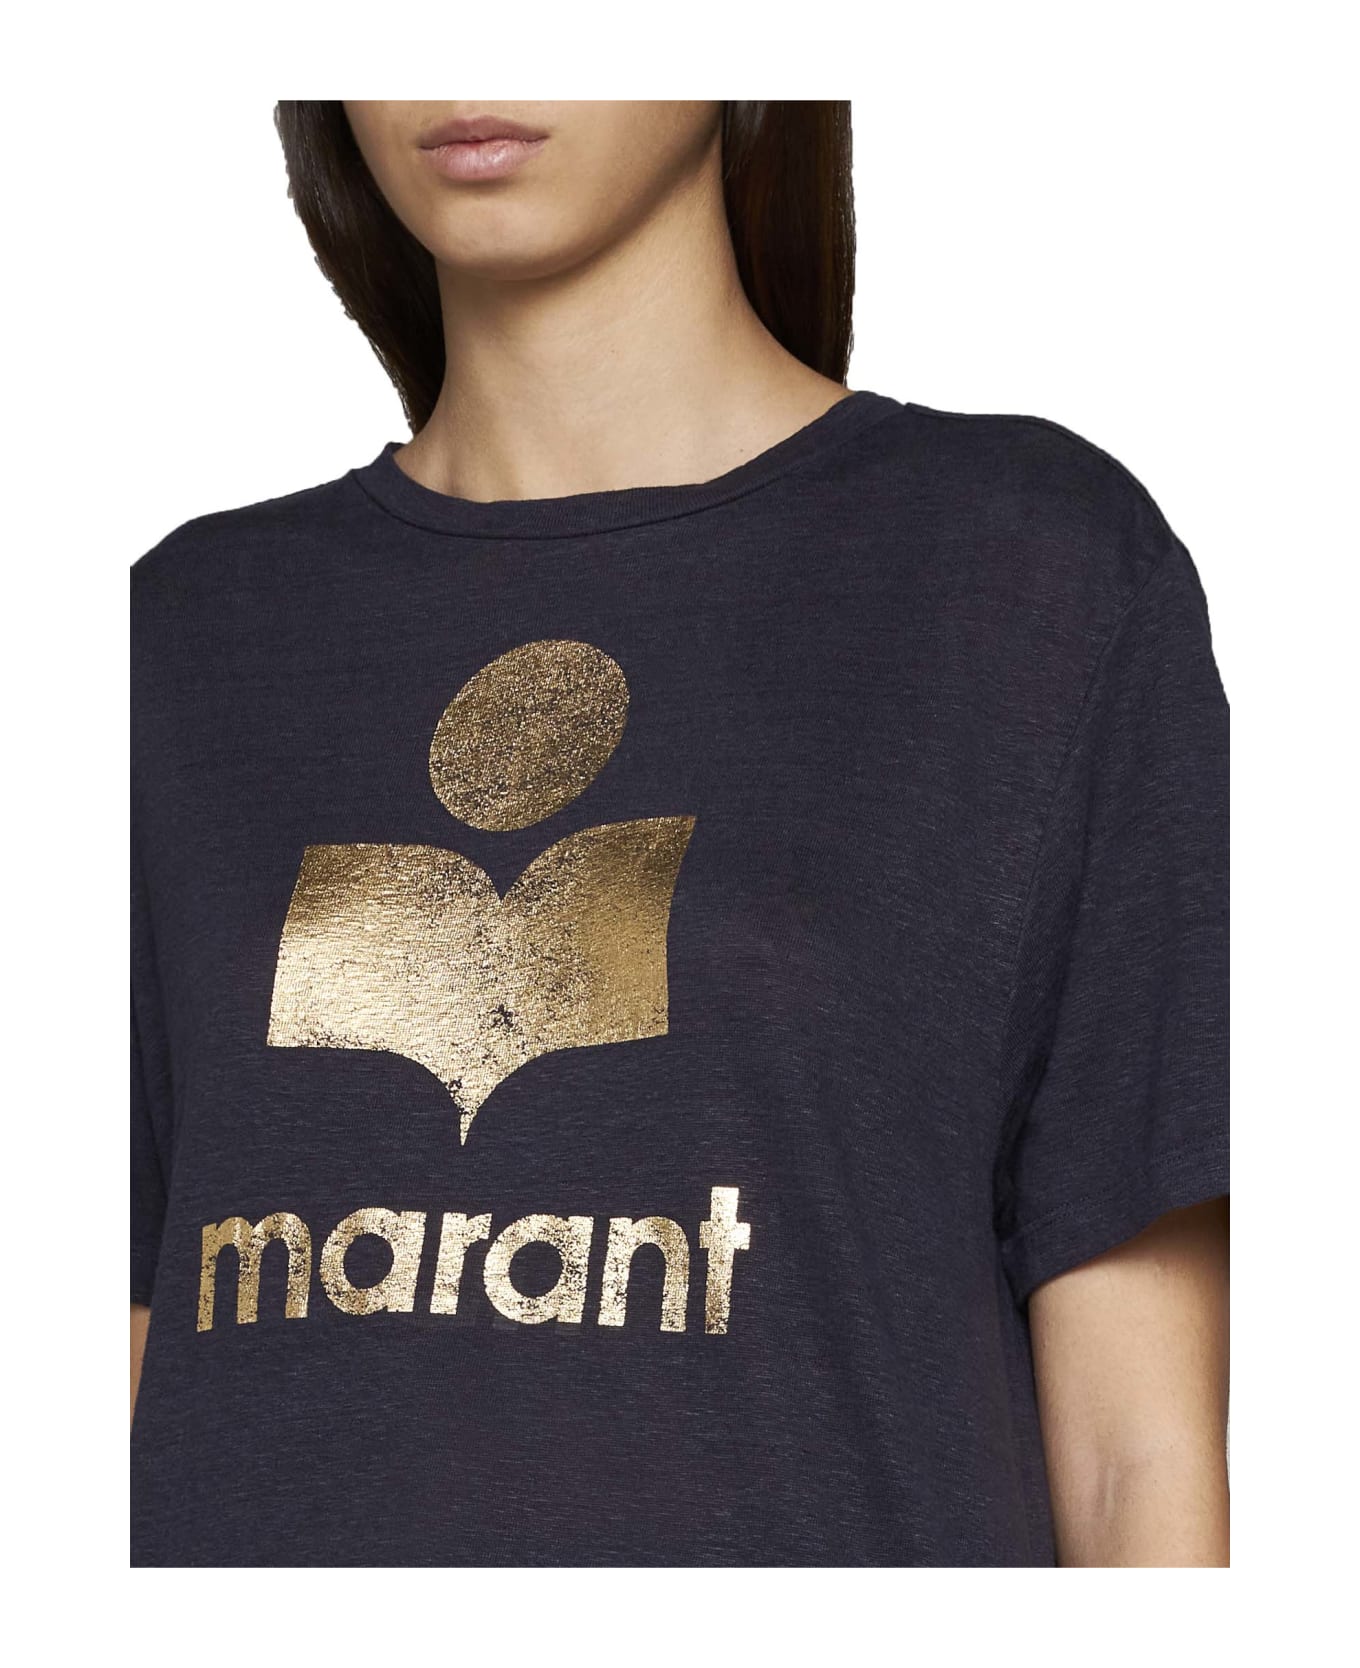 Marant Étoile Zewel T-shirt - Faded night/gold